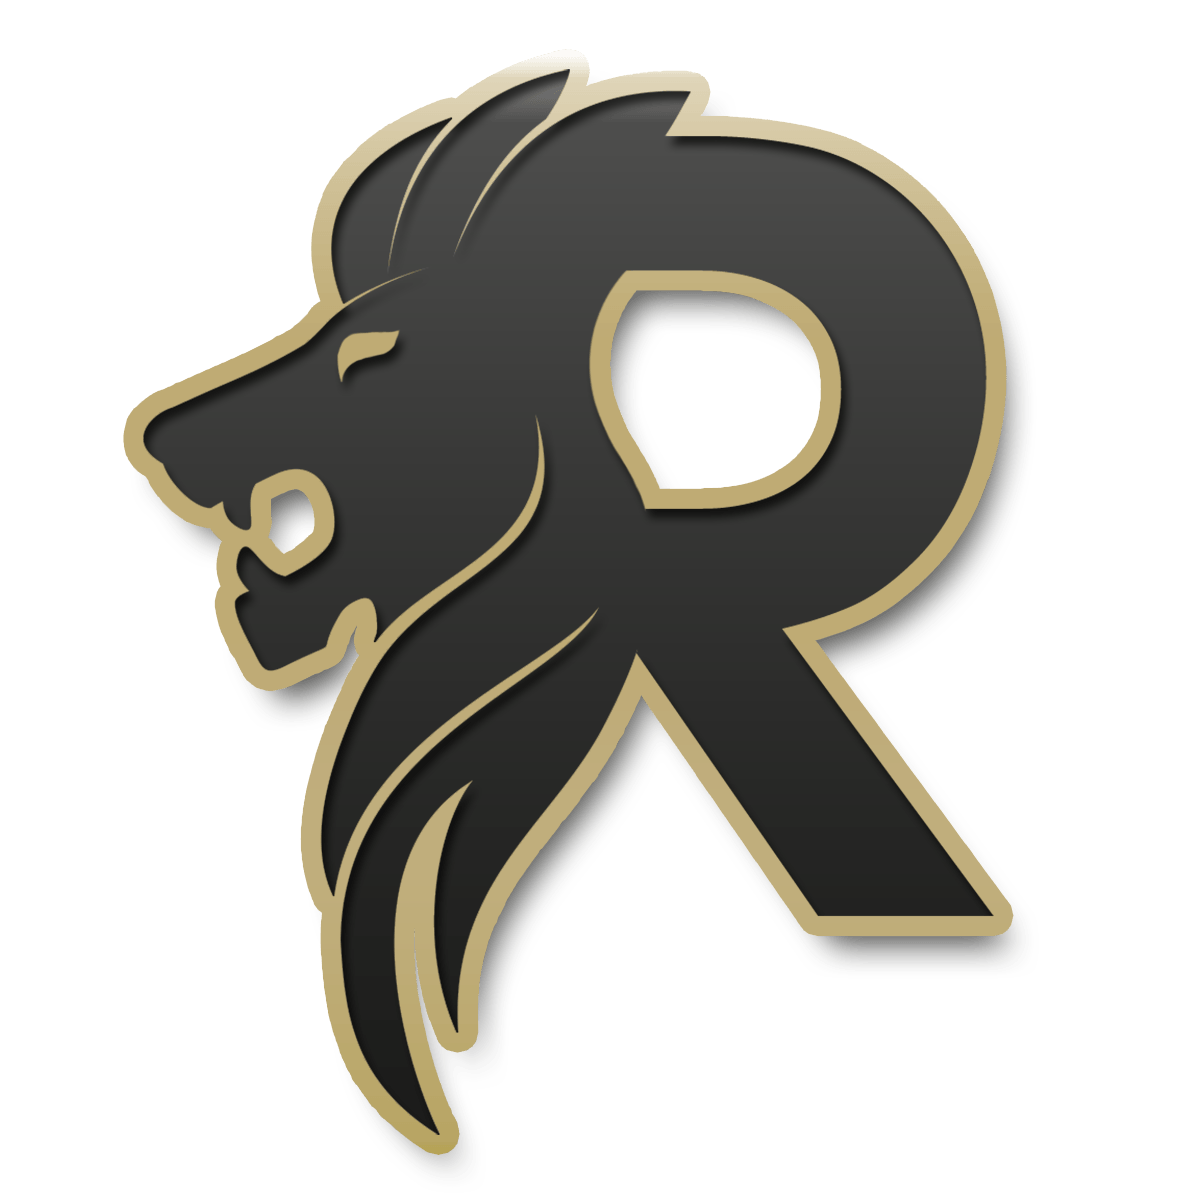 R modern app logo by Rony Pa - Logo Designer 🔵 on Dribbble